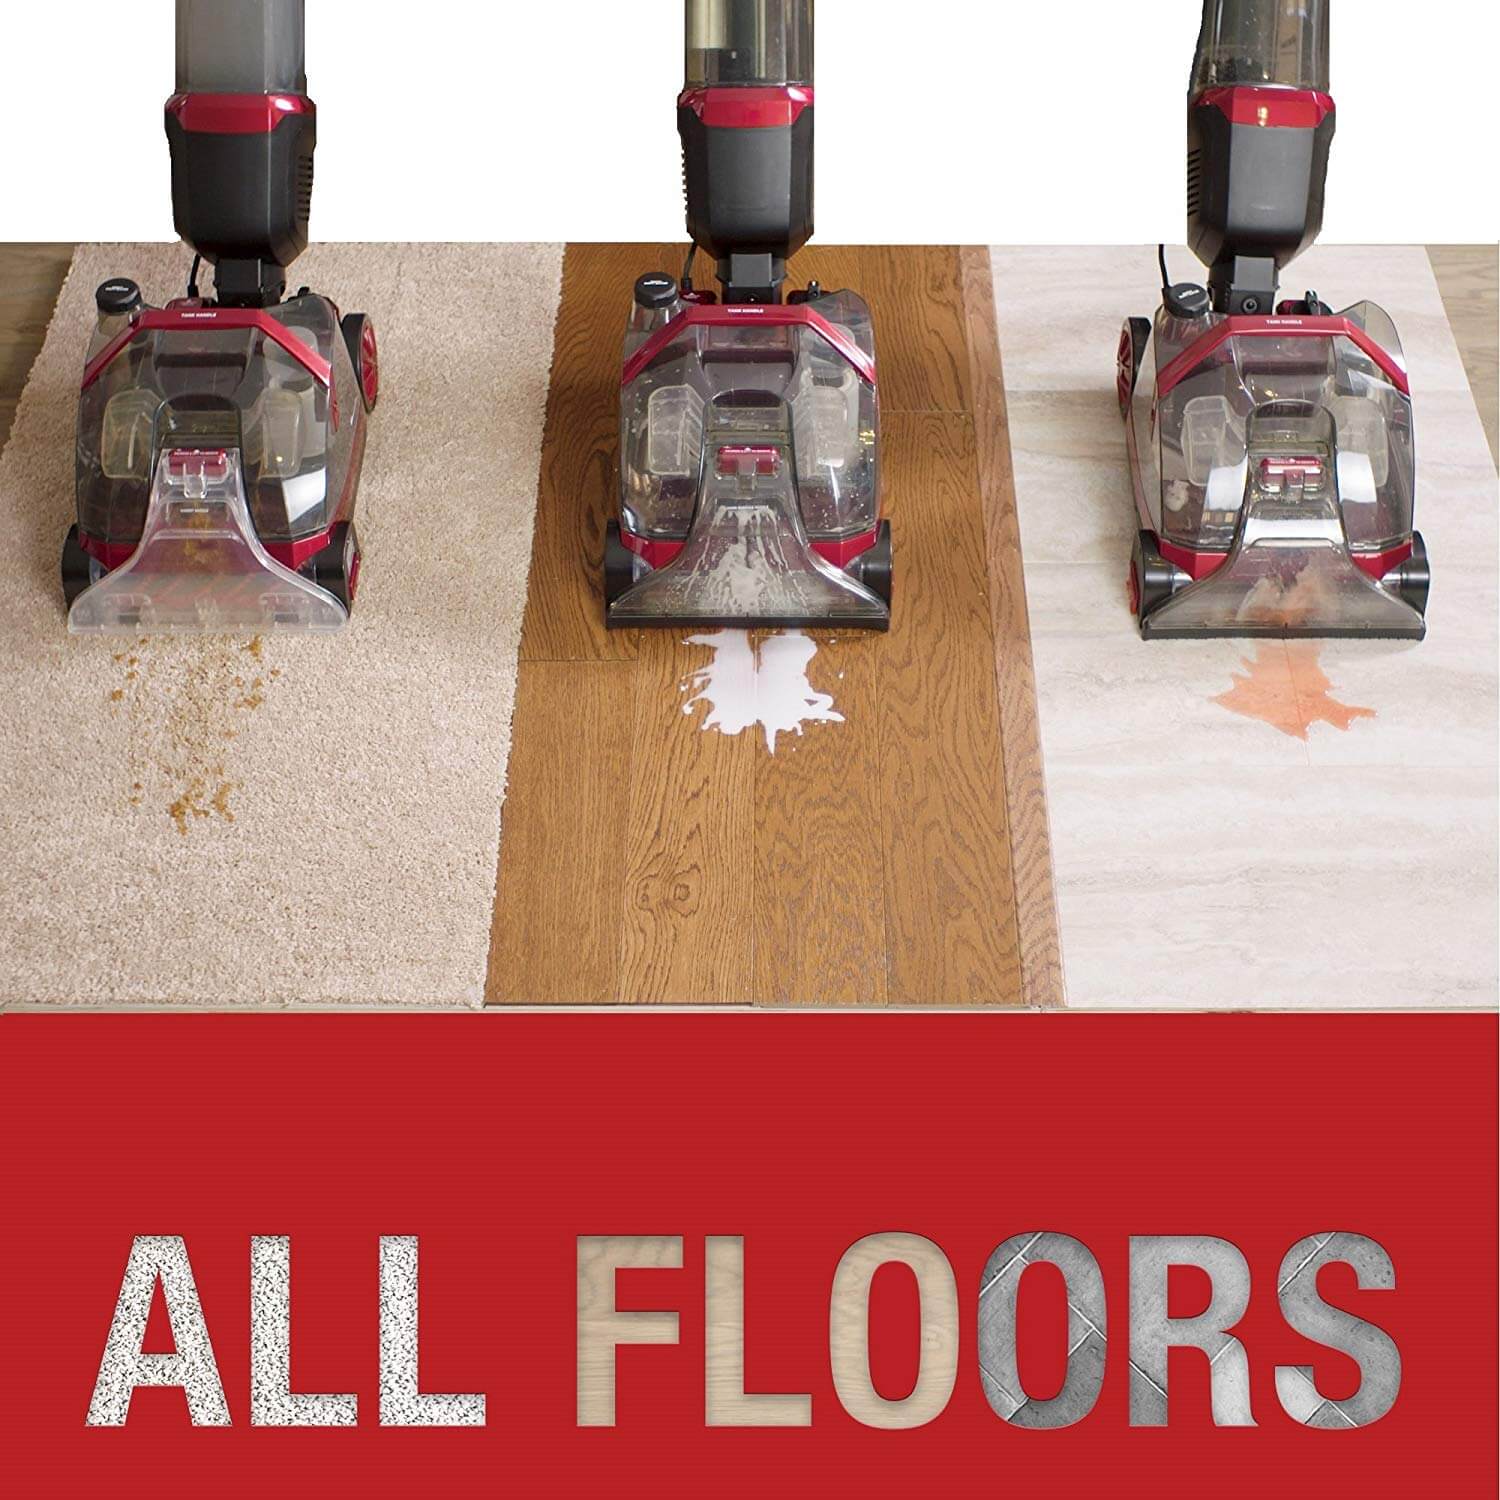 Flexclean All In One Floor Cleaner, Steam Vacuum Cleaner For Carpet And Hardwood Floors